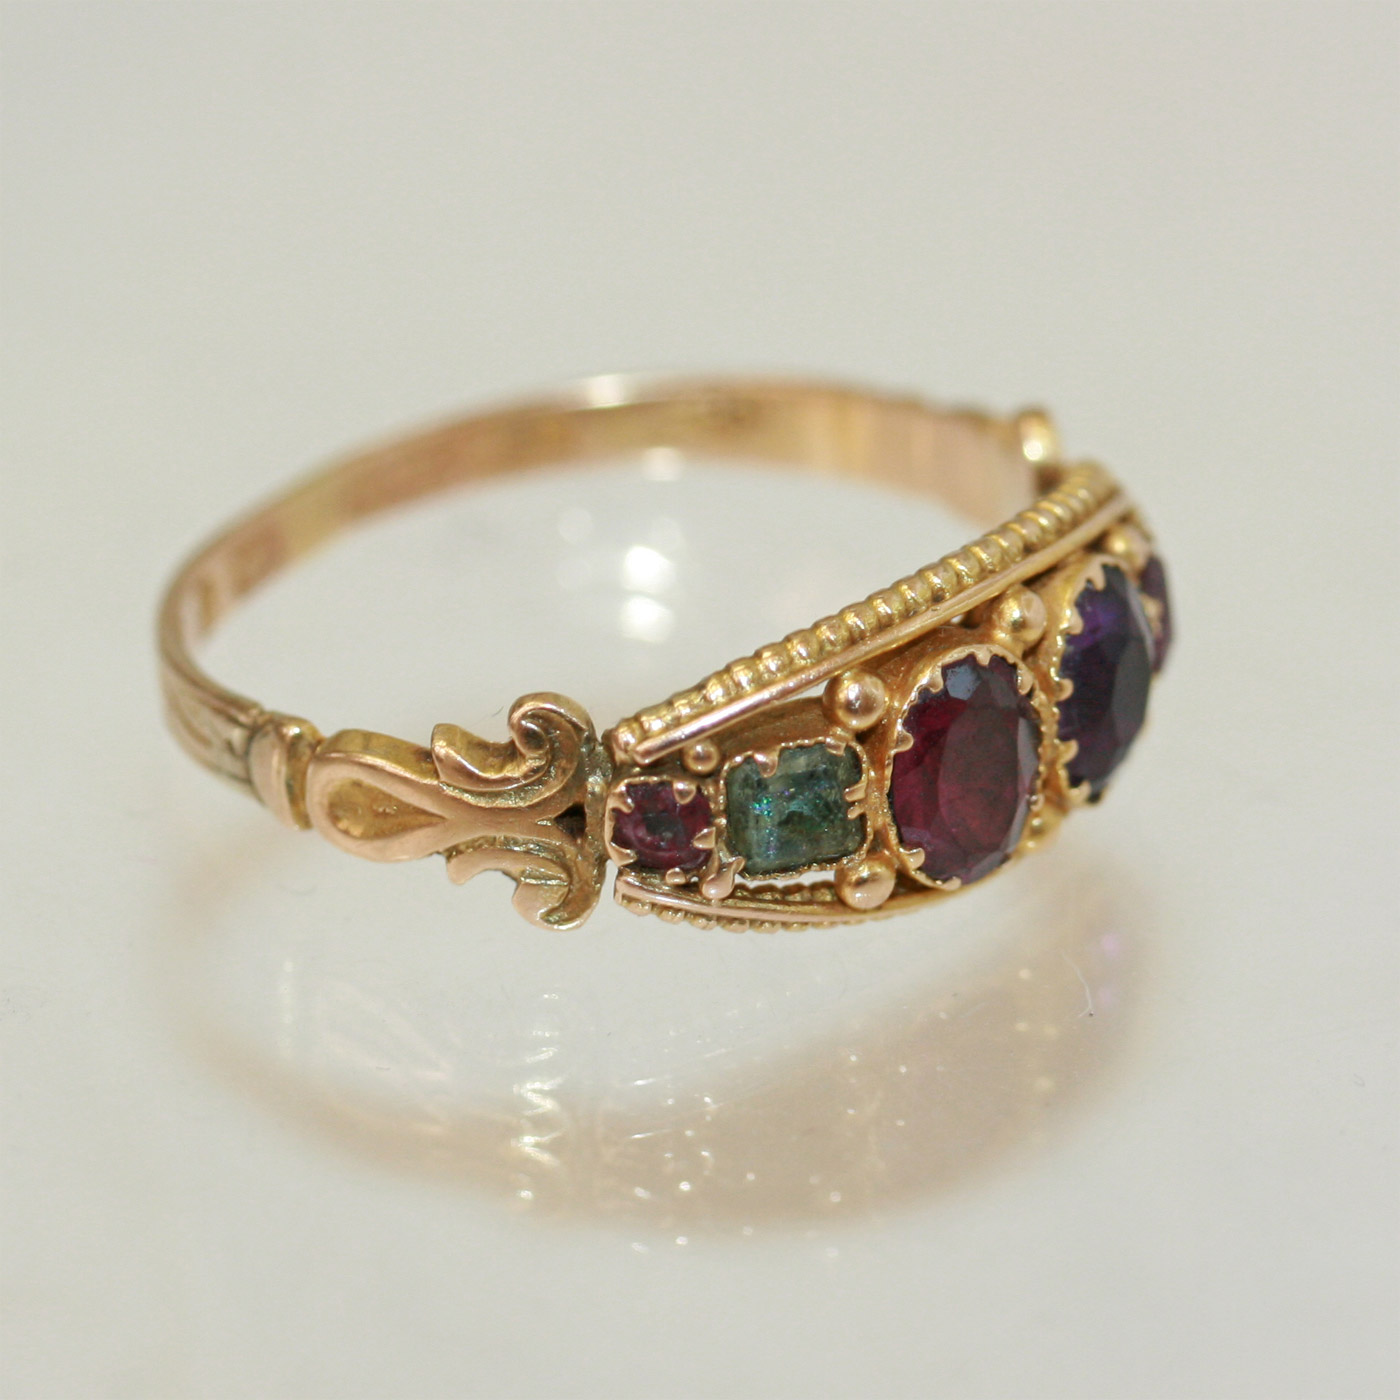 Buy Antique Victorian REGARD ring. Sold Items, Sold Rings Sydney